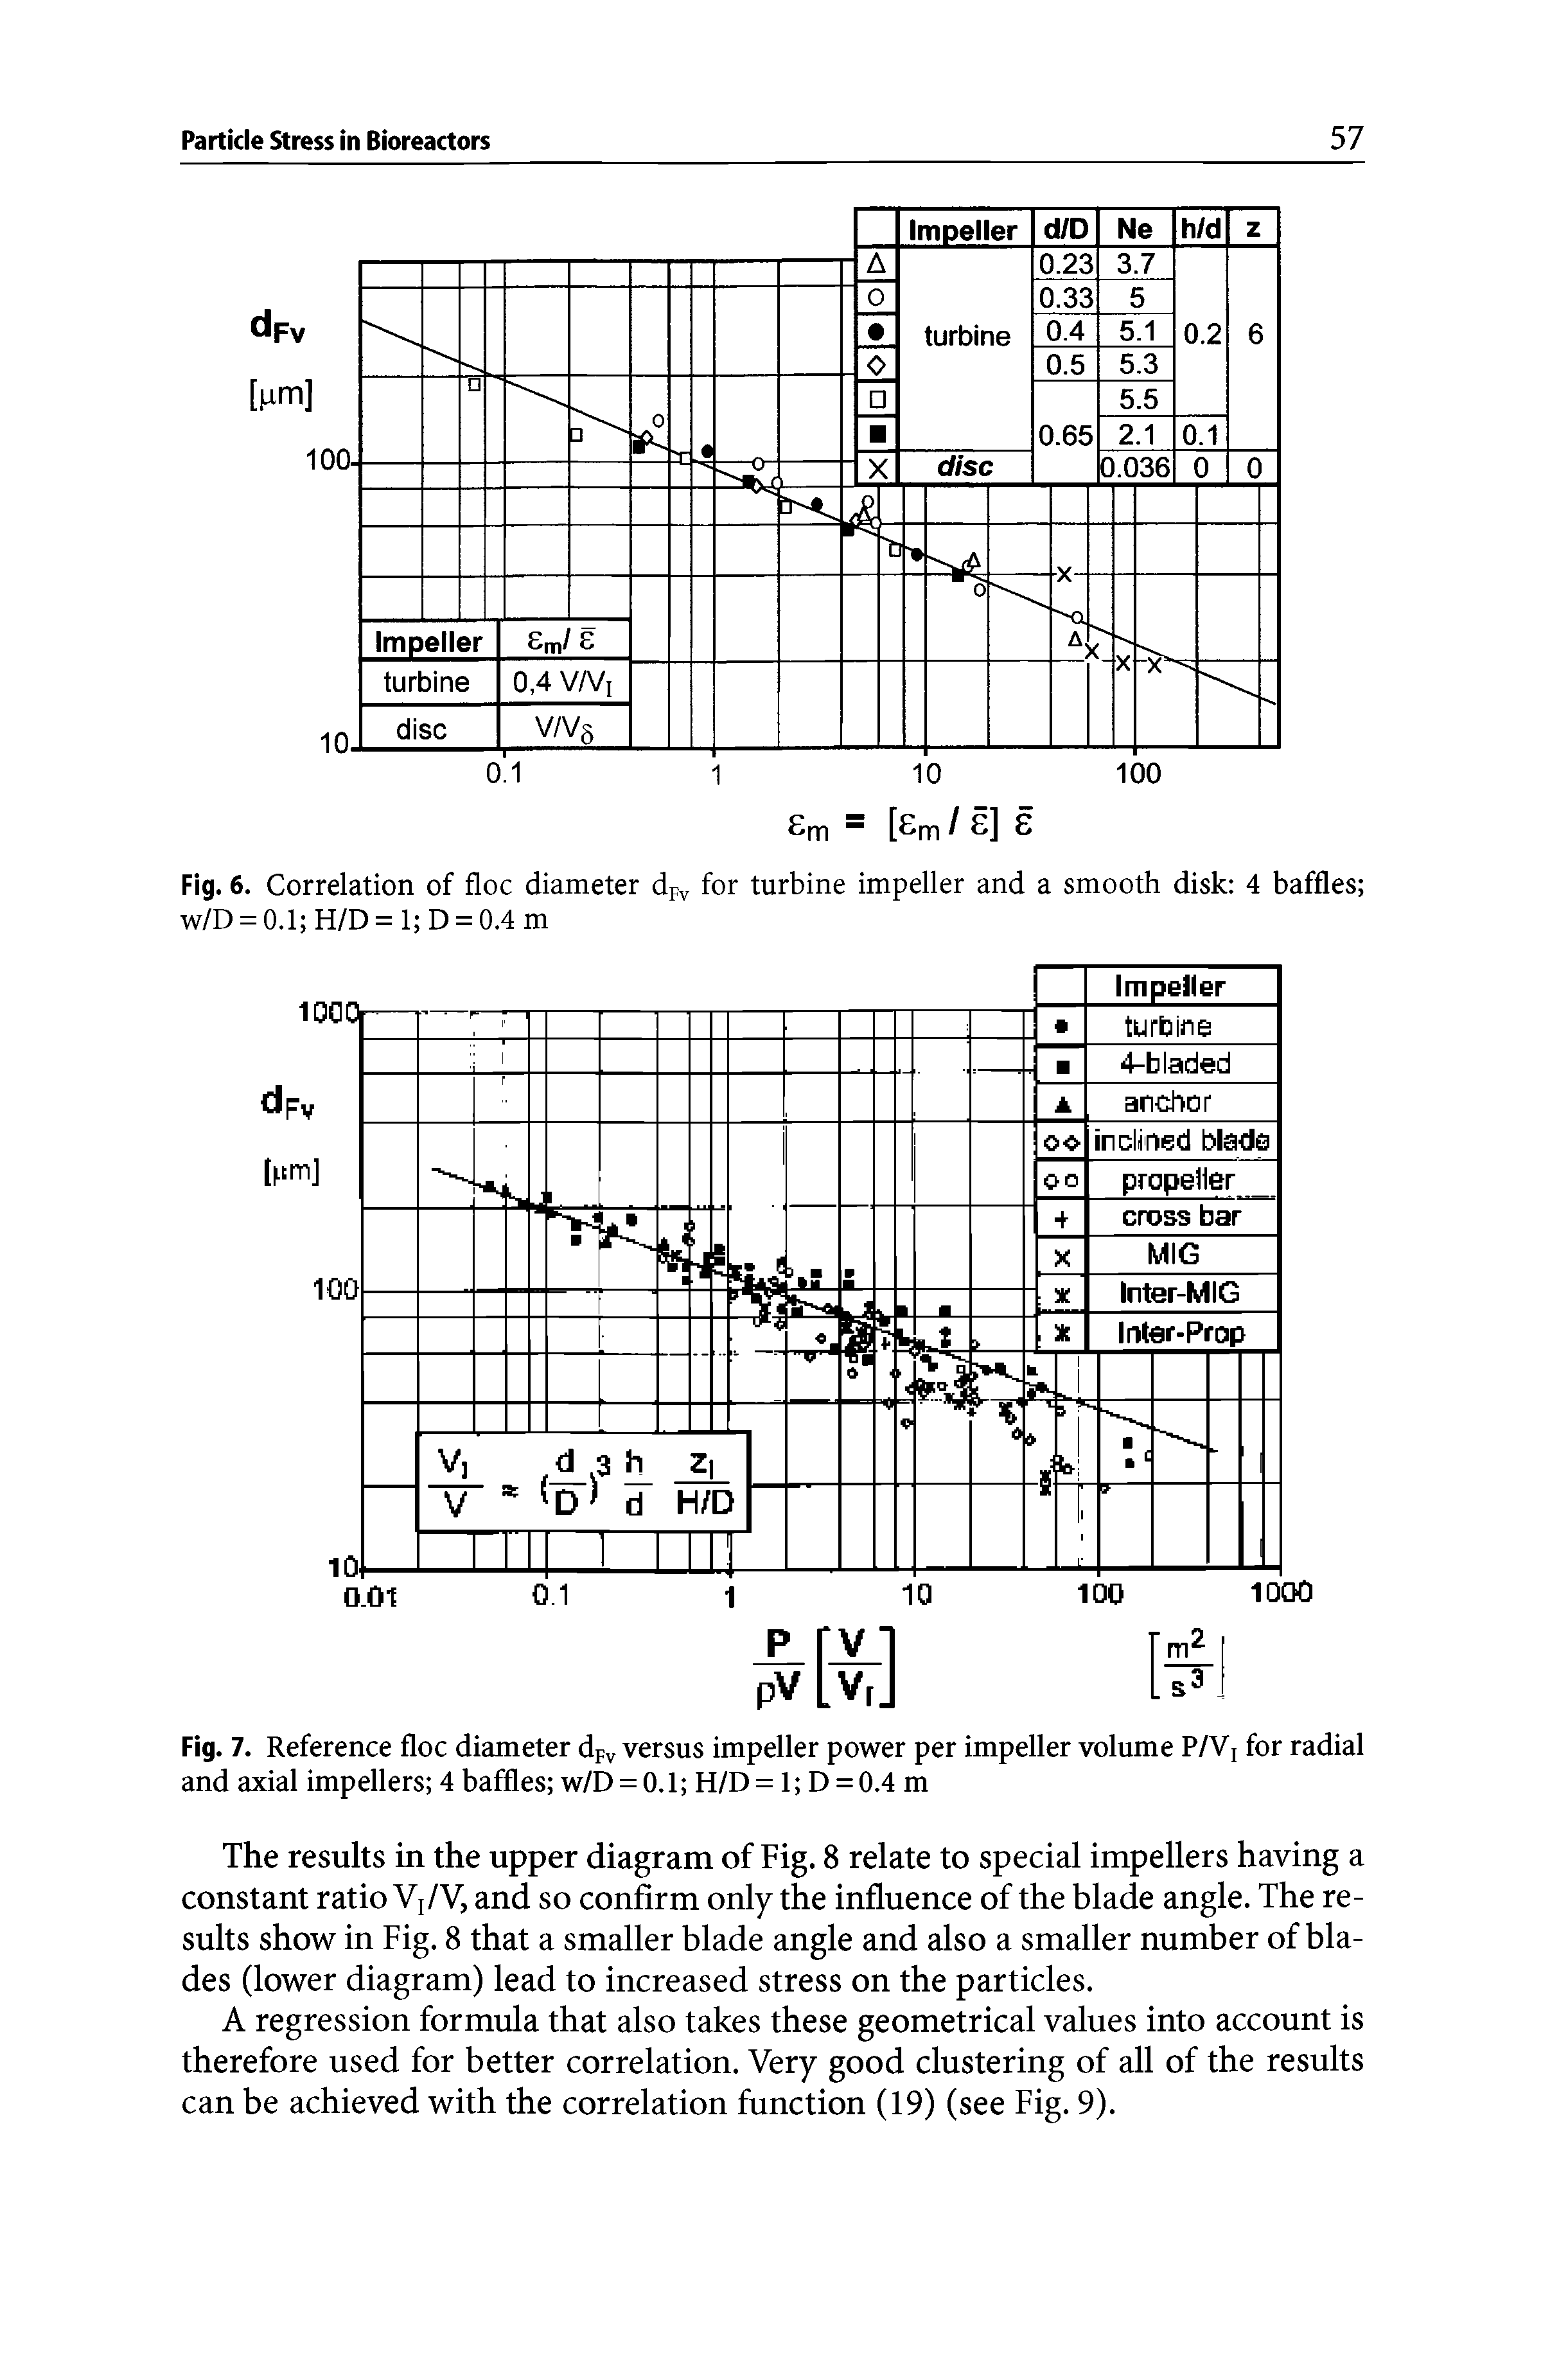 Fig. 7. Reference floe diameter dpv versus impeller power per impeller volume P/V, for radial and axial impellers 4 baffles w/D = 0.1 H/D = 1 D = 0.4 m...